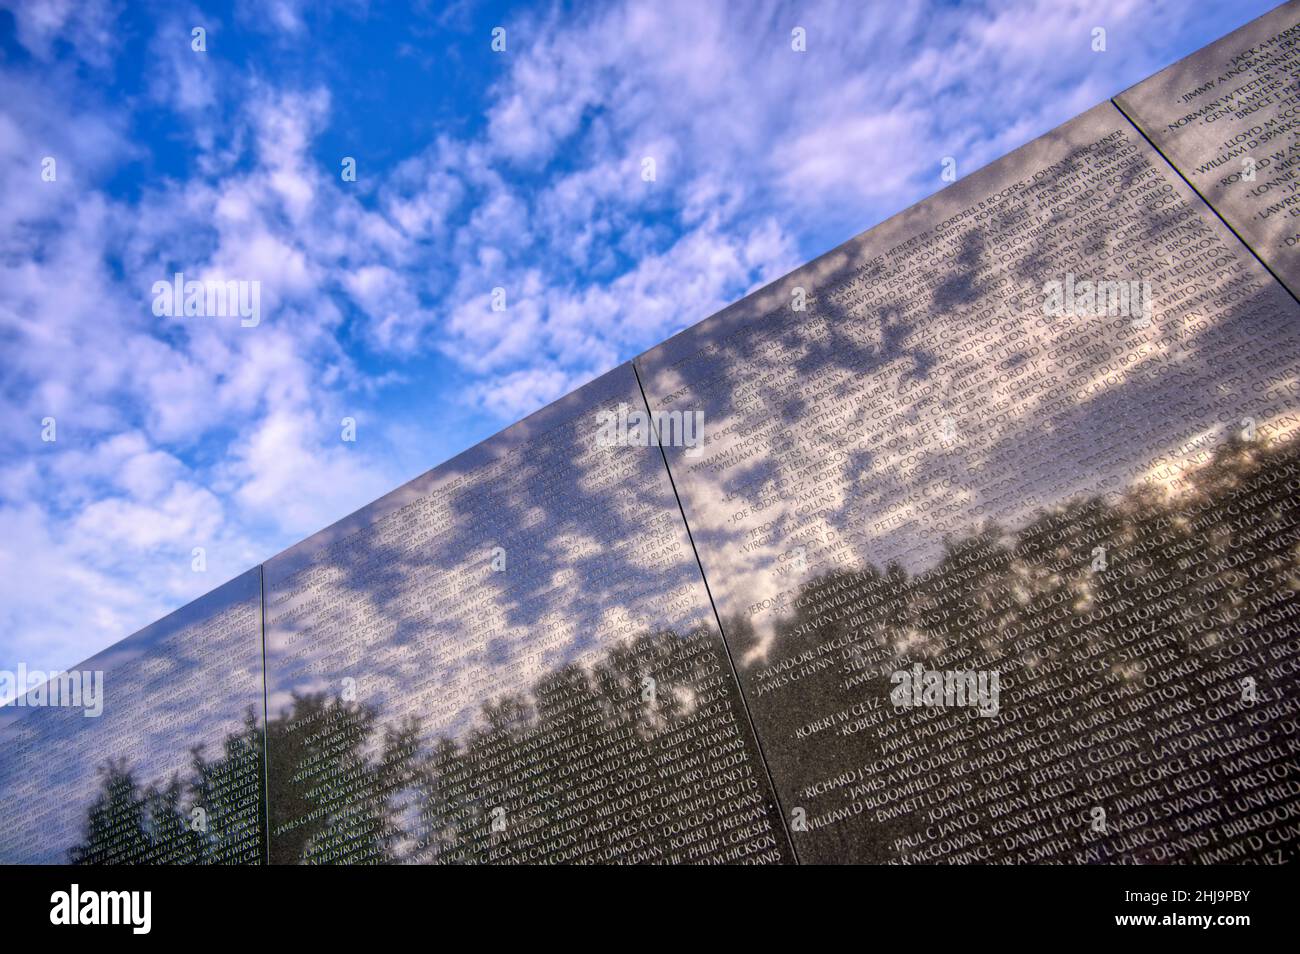 Washington, D.C. - October 15th, 2021: The Vietnam Veterans Memorial on the National Mall in Washington, D.C. Stock Photo